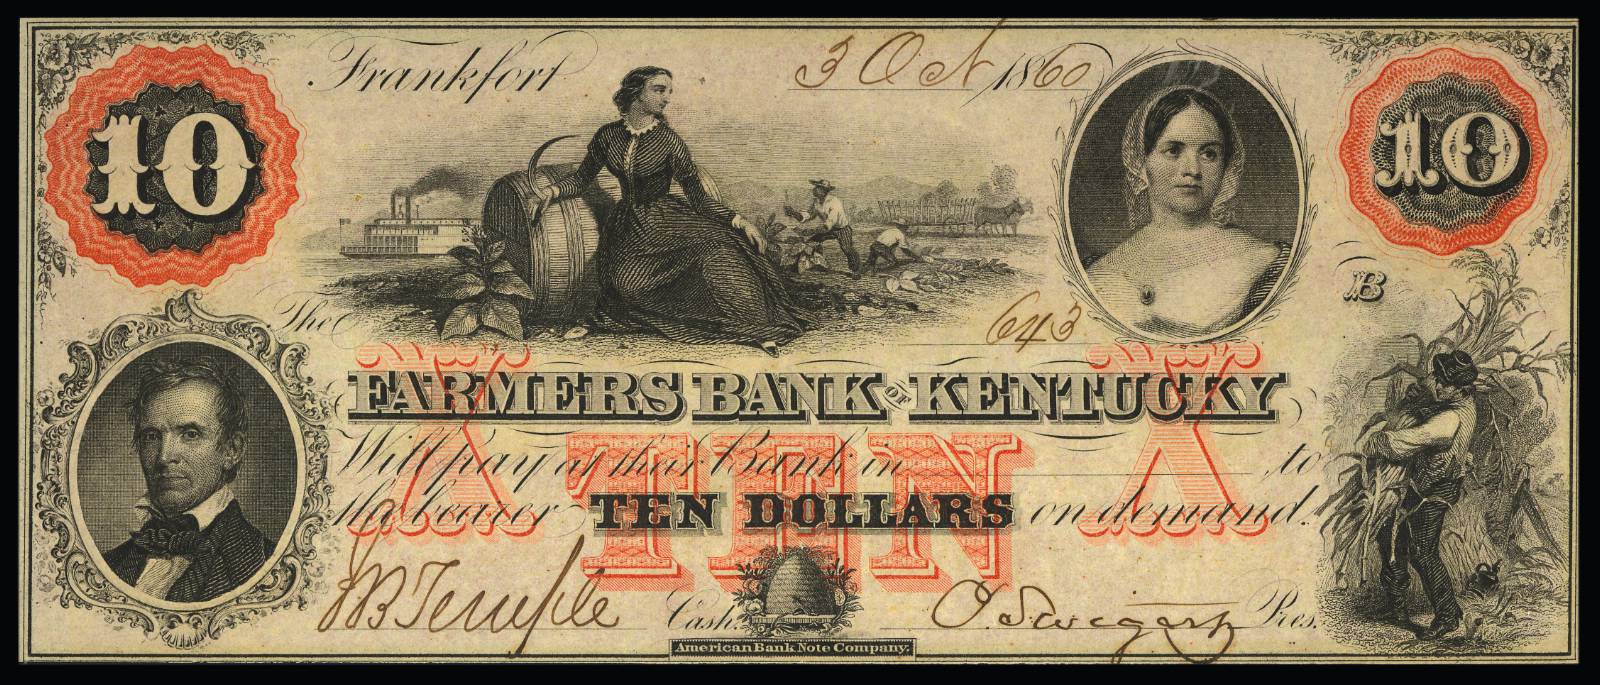 T me blank banknotes. Деньги Конфедерации. Old money стиль. Американский доллар арт. Dollar American 1860.